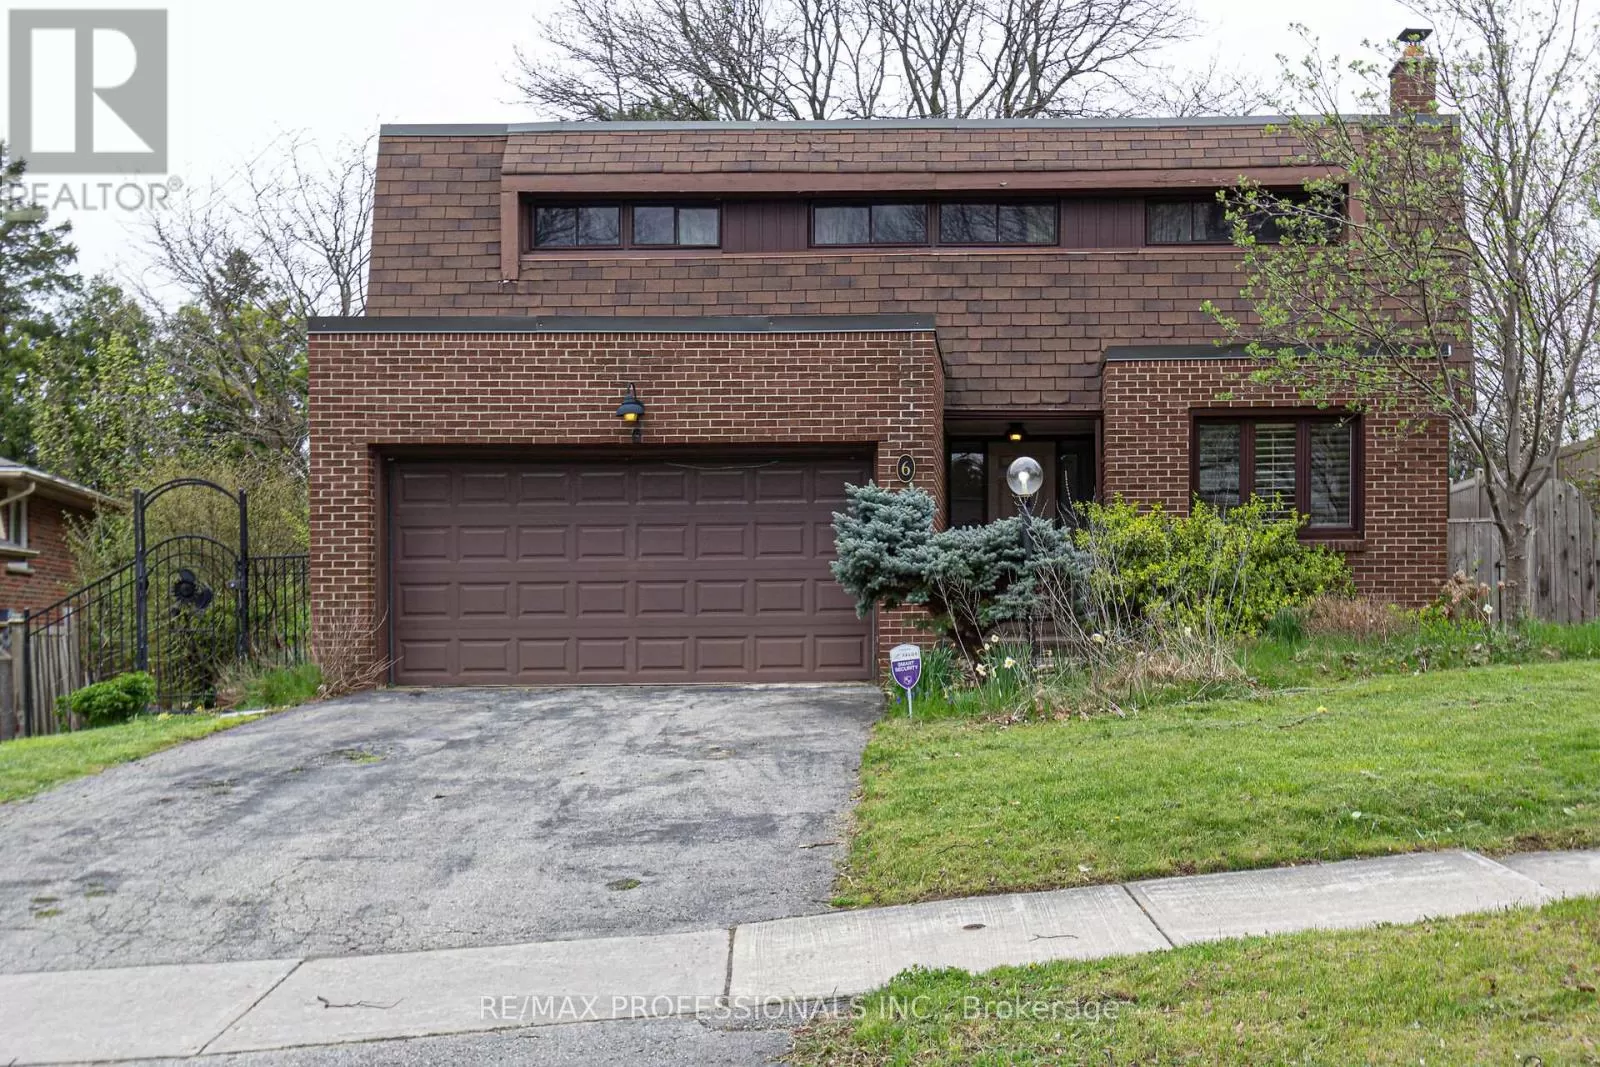 House for rent: 6 Mogul Drive, Toronto, Ontario M2H 2M7